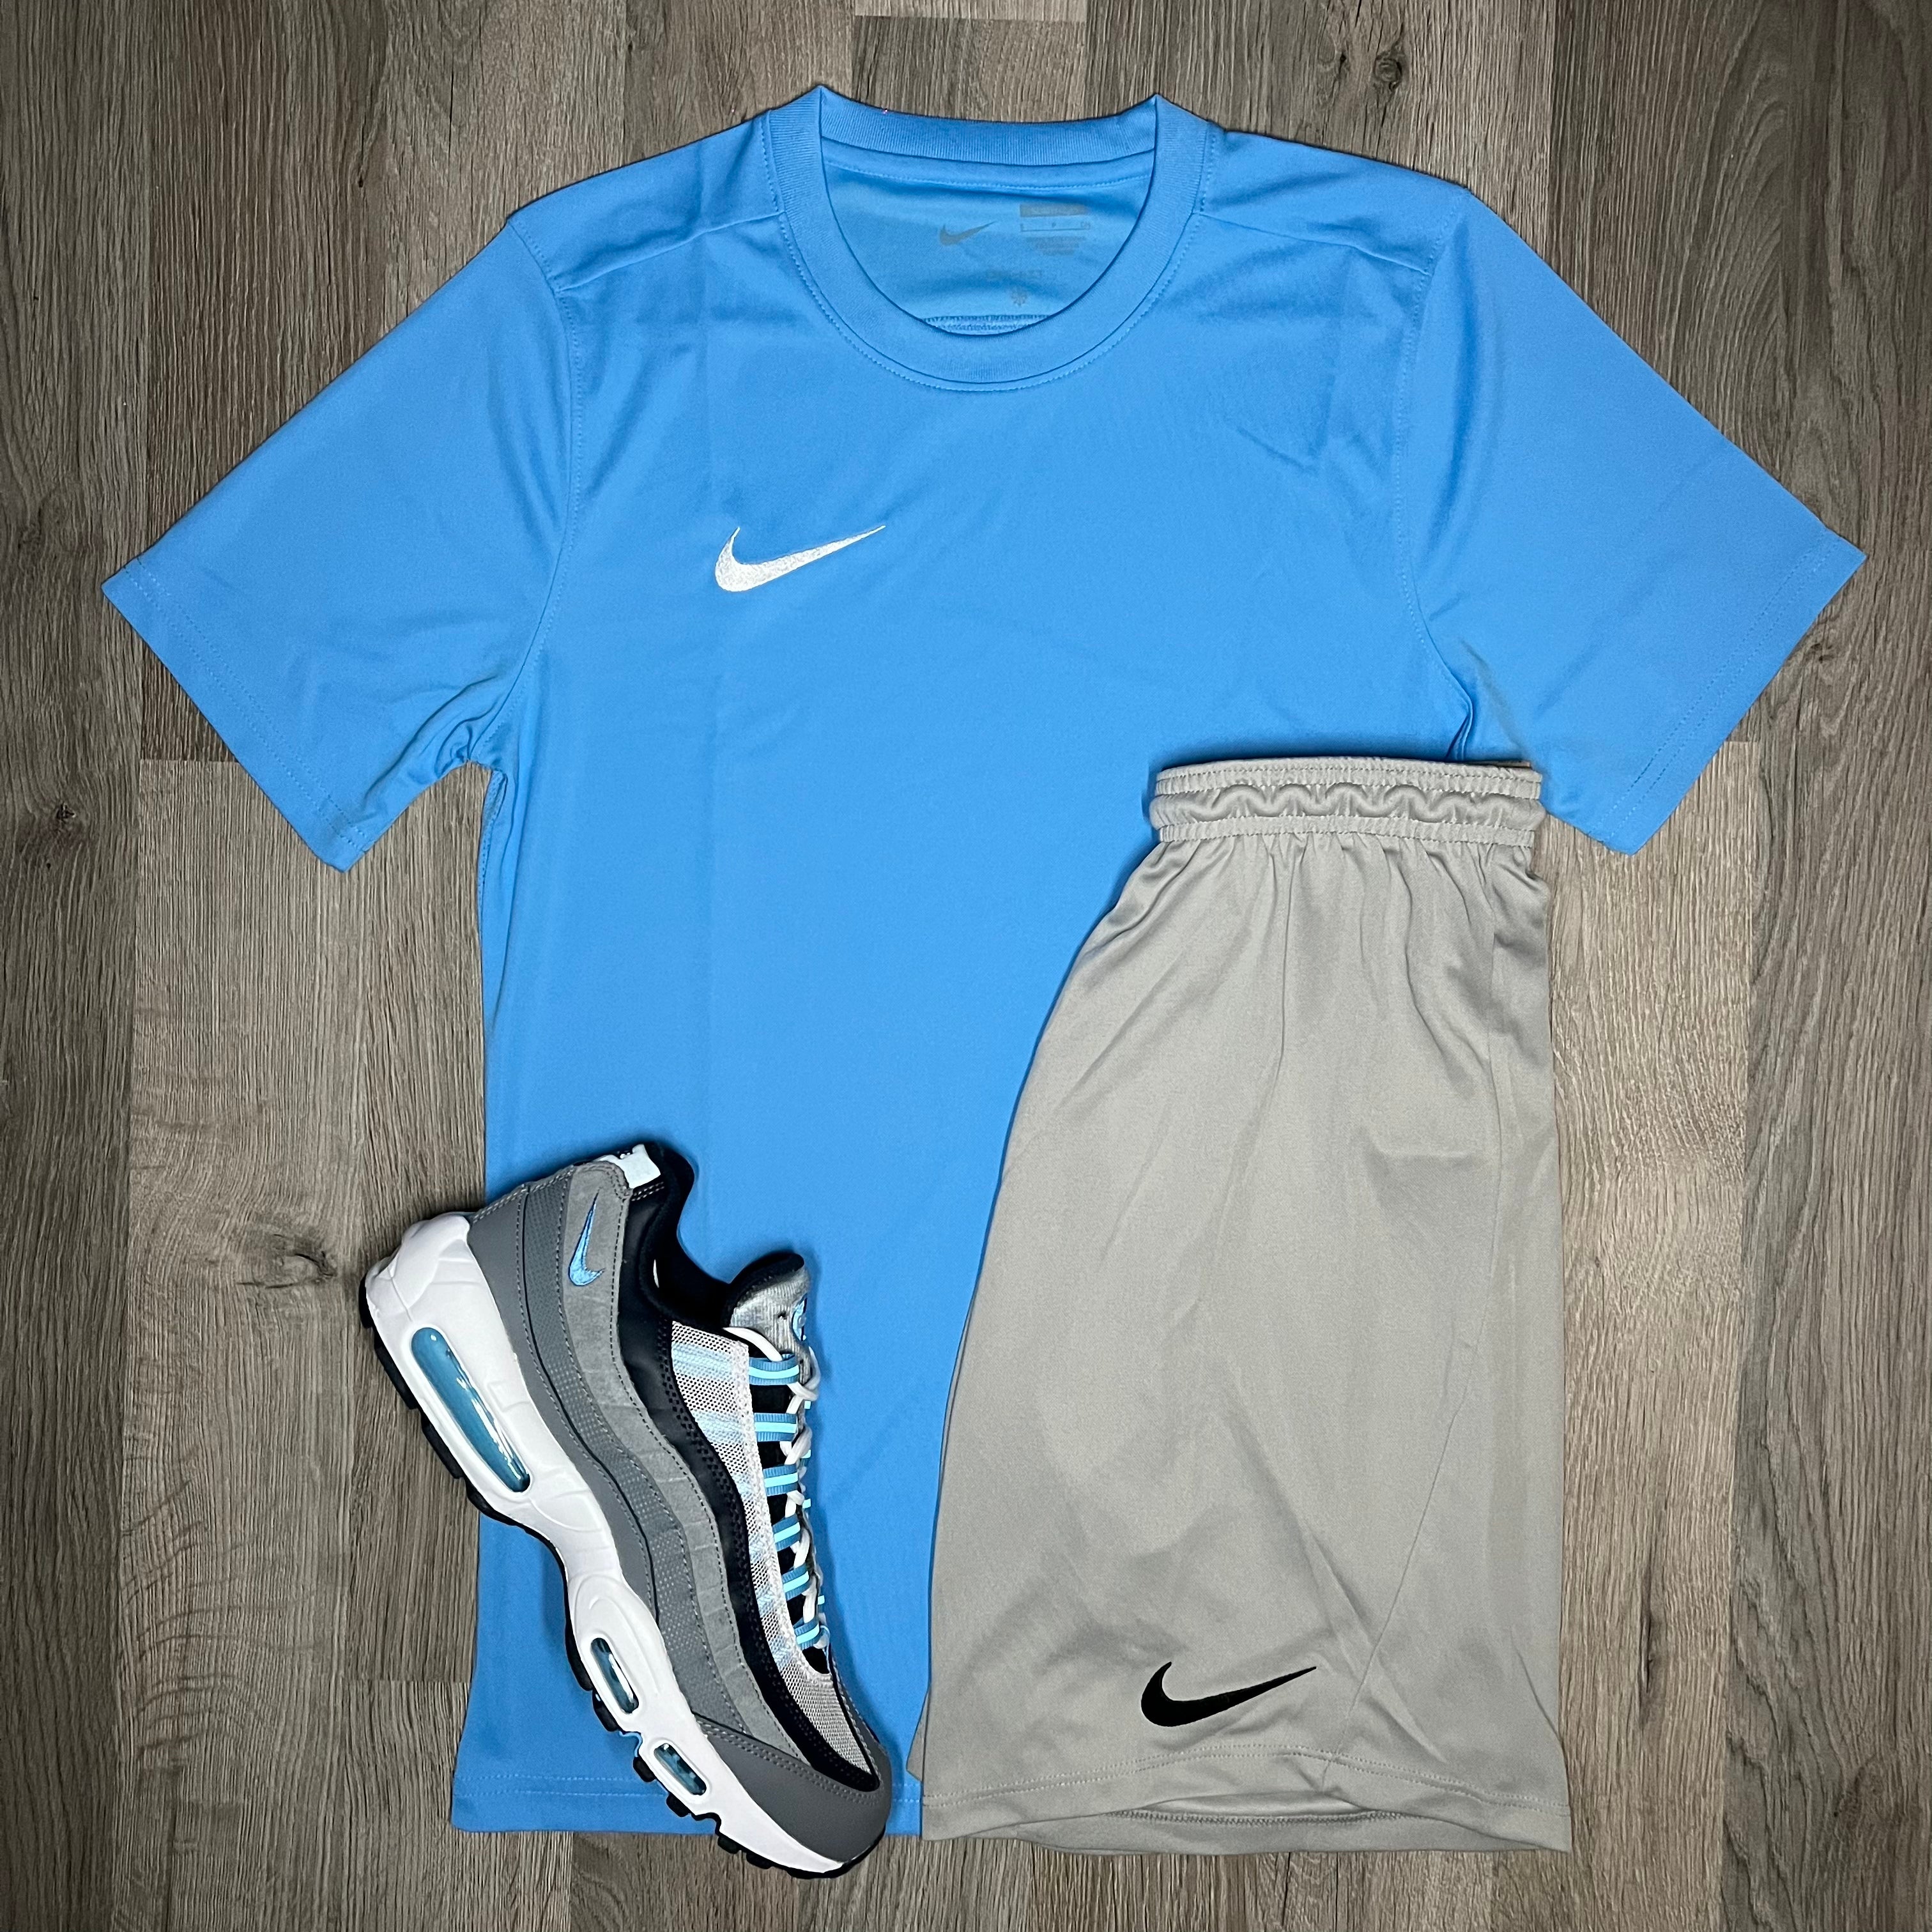 Nike Air Max 95 Cool Grey Blue + Dri Fit Set - Tee & Shorts